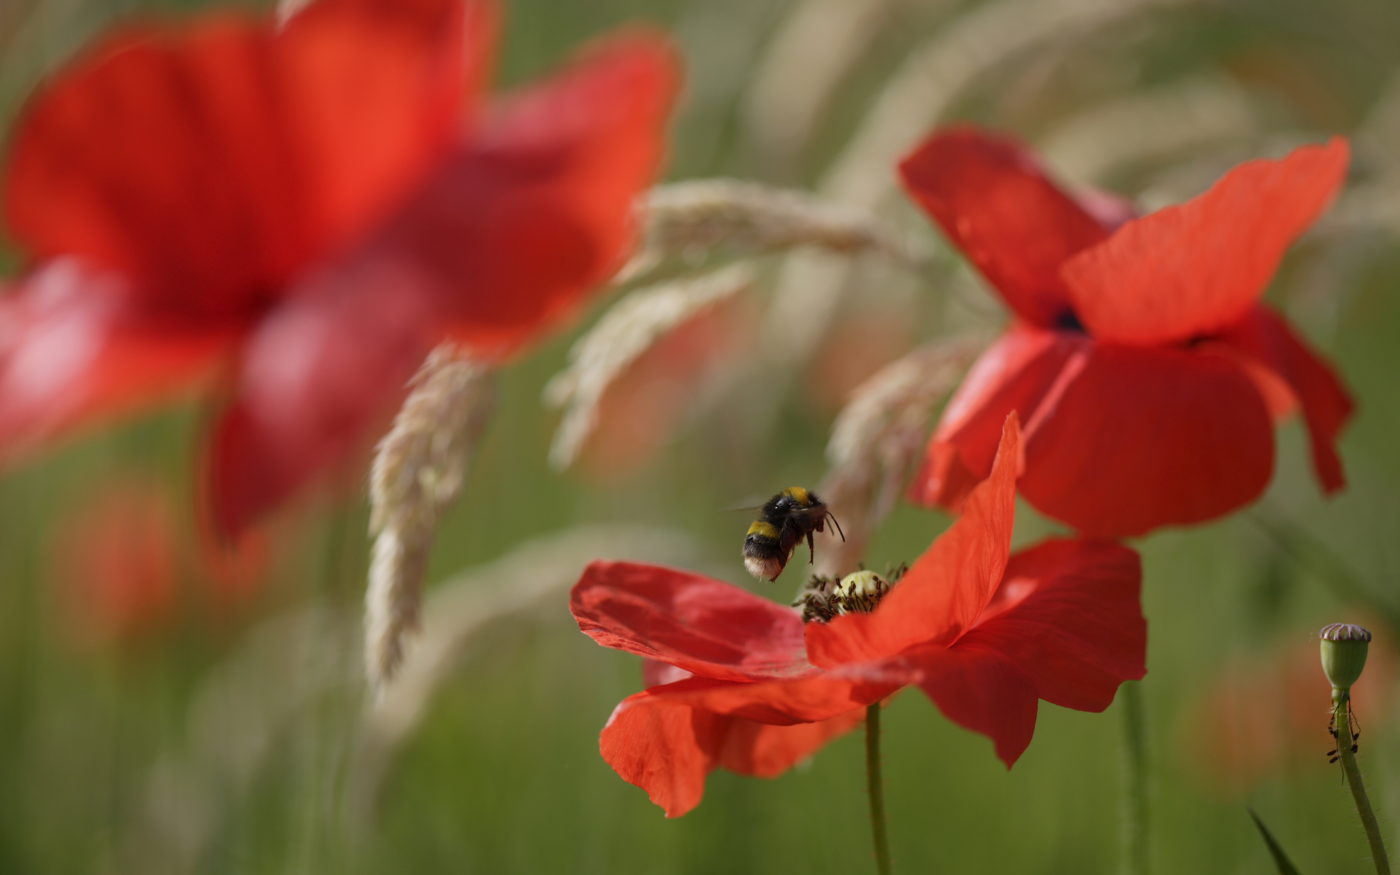 Bumblebee & poppies, Bombus terrestris